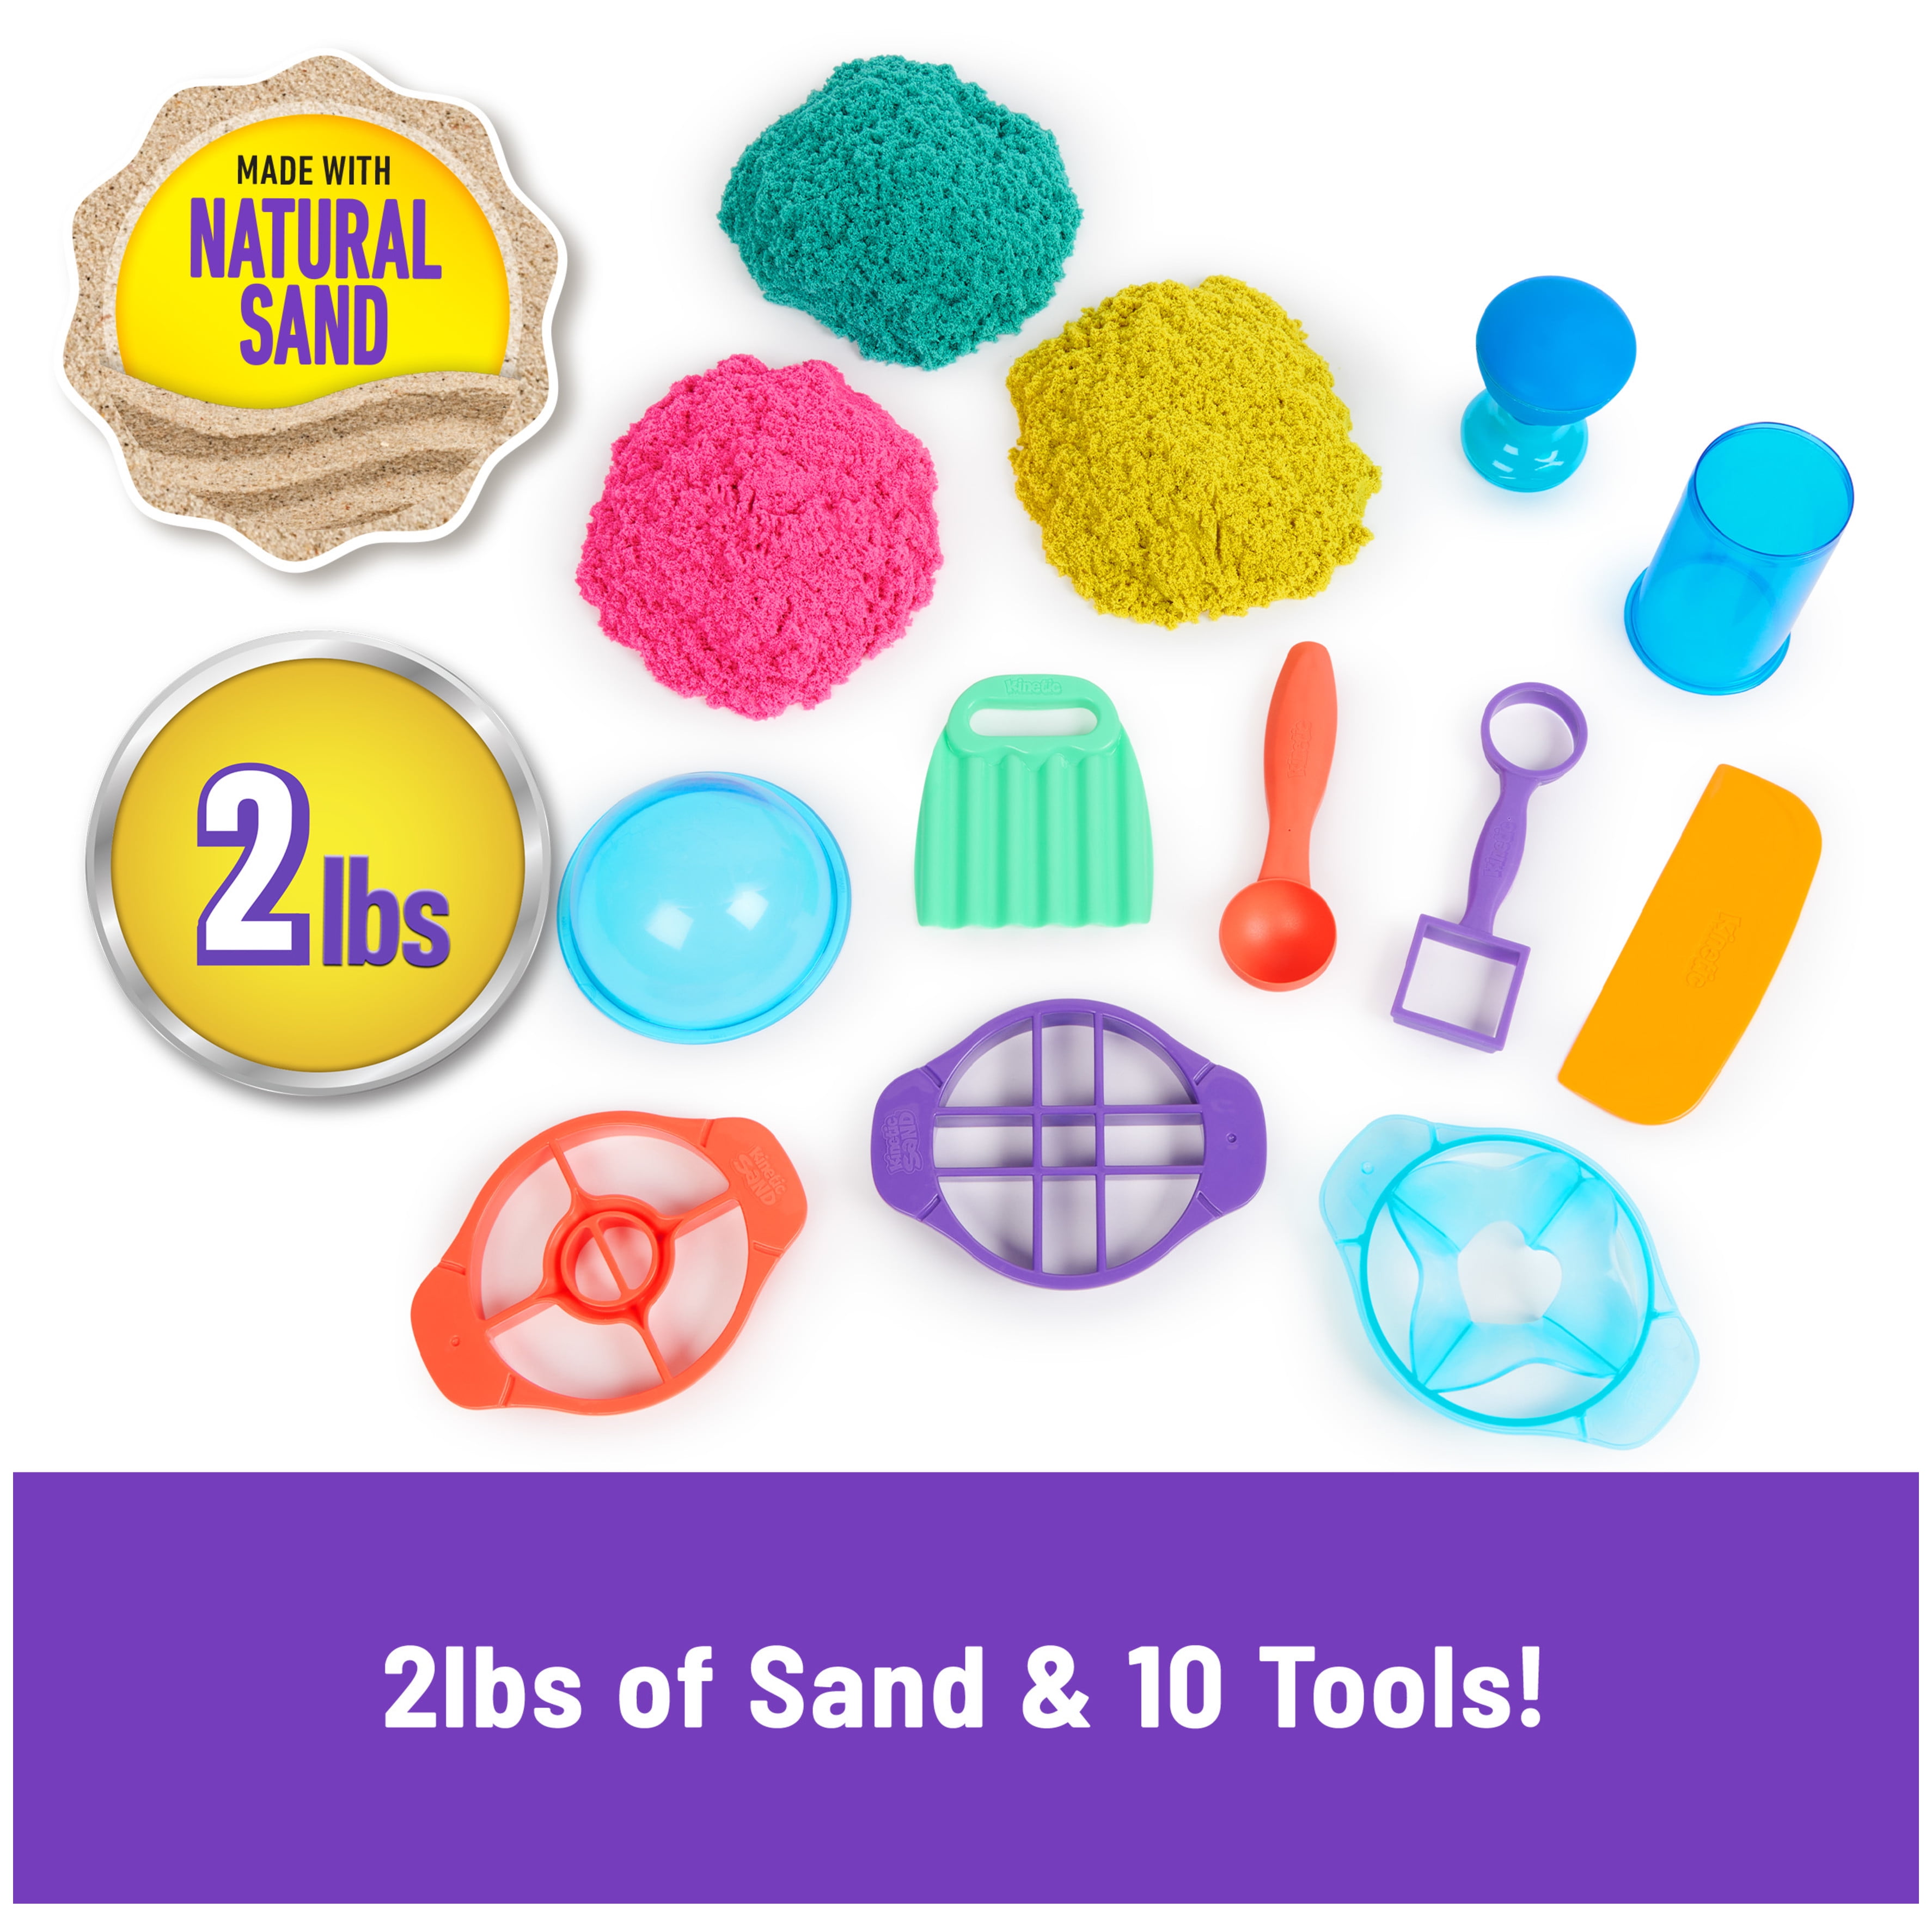 Kinetic Sand Sac de 907g violet - N/A - Kiabi - 15.29€